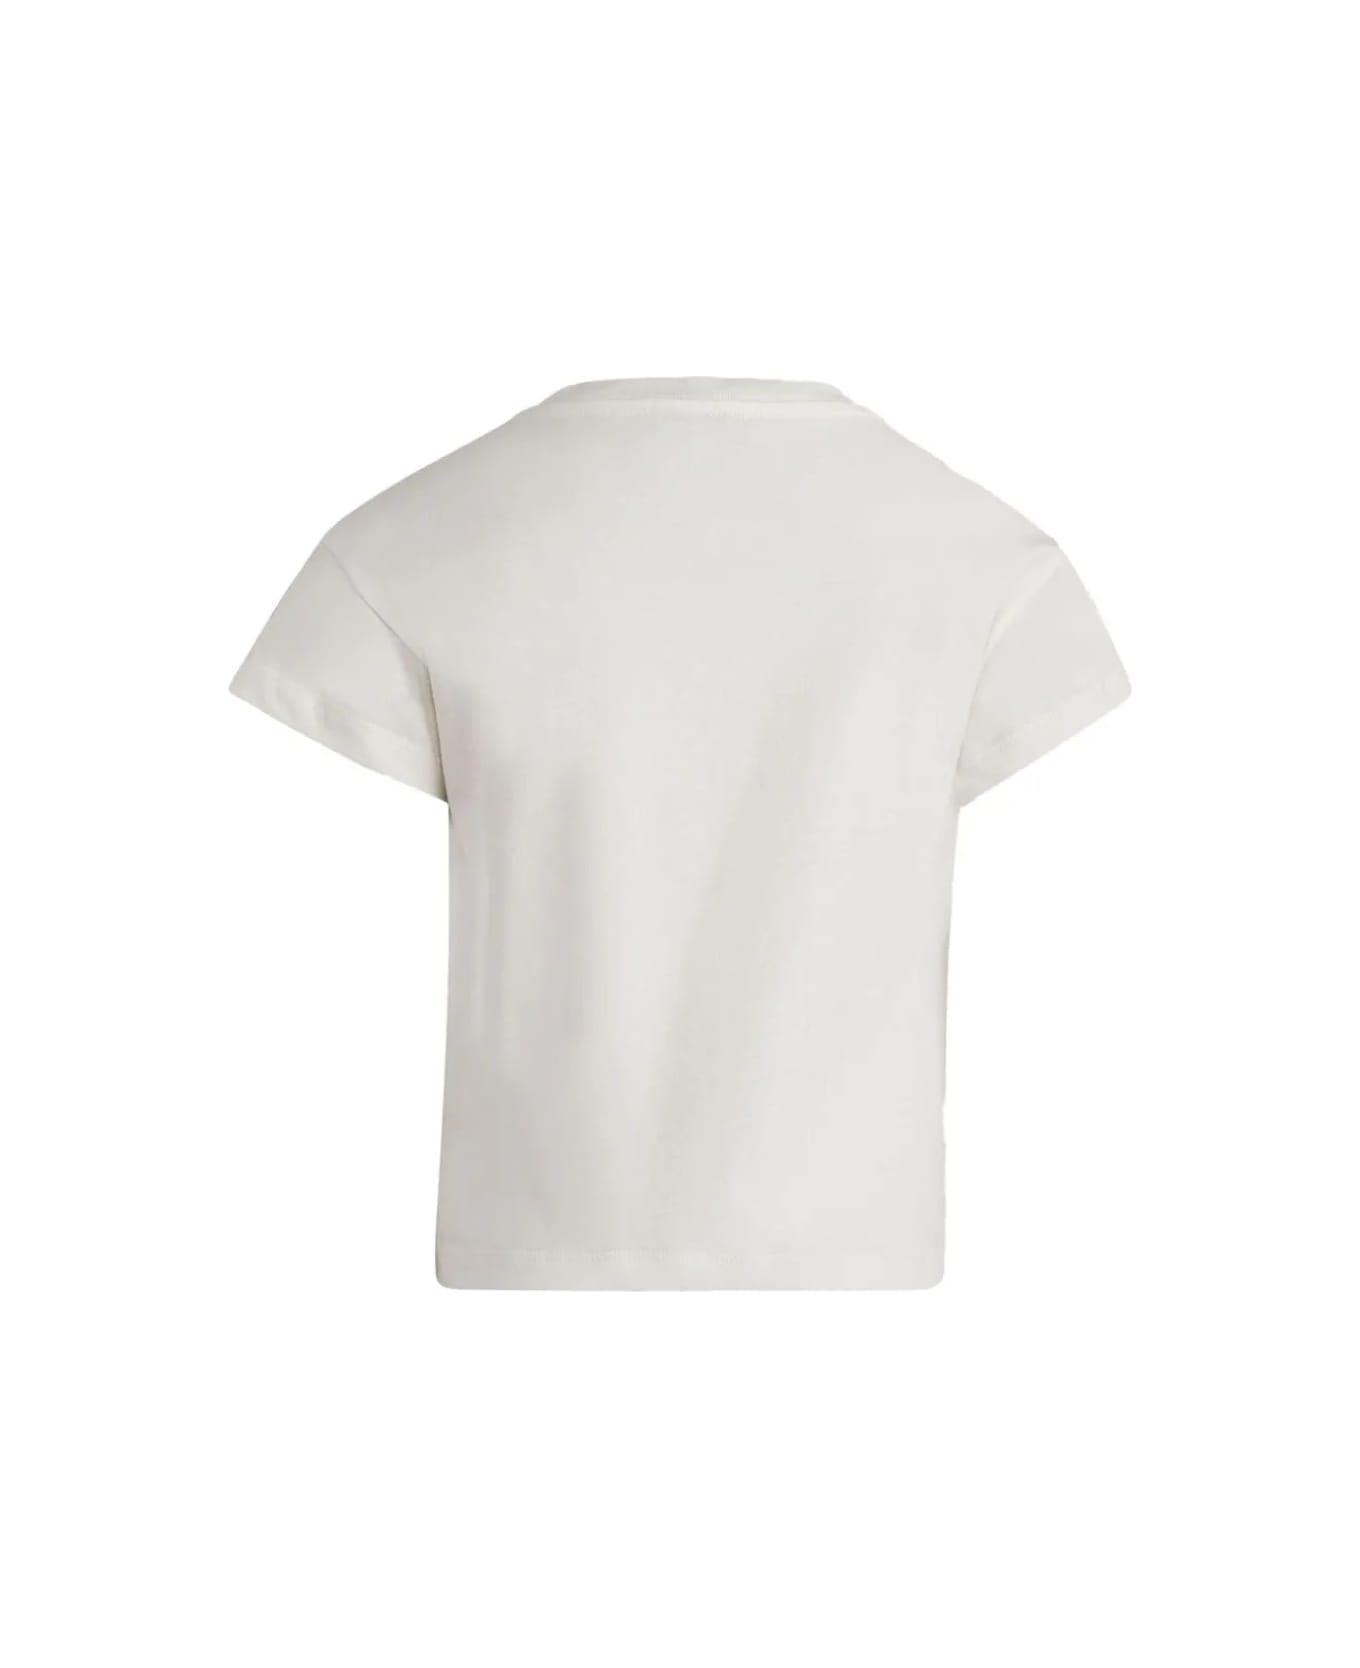 Etro White T-shirt With Embroidery On Neckline - White